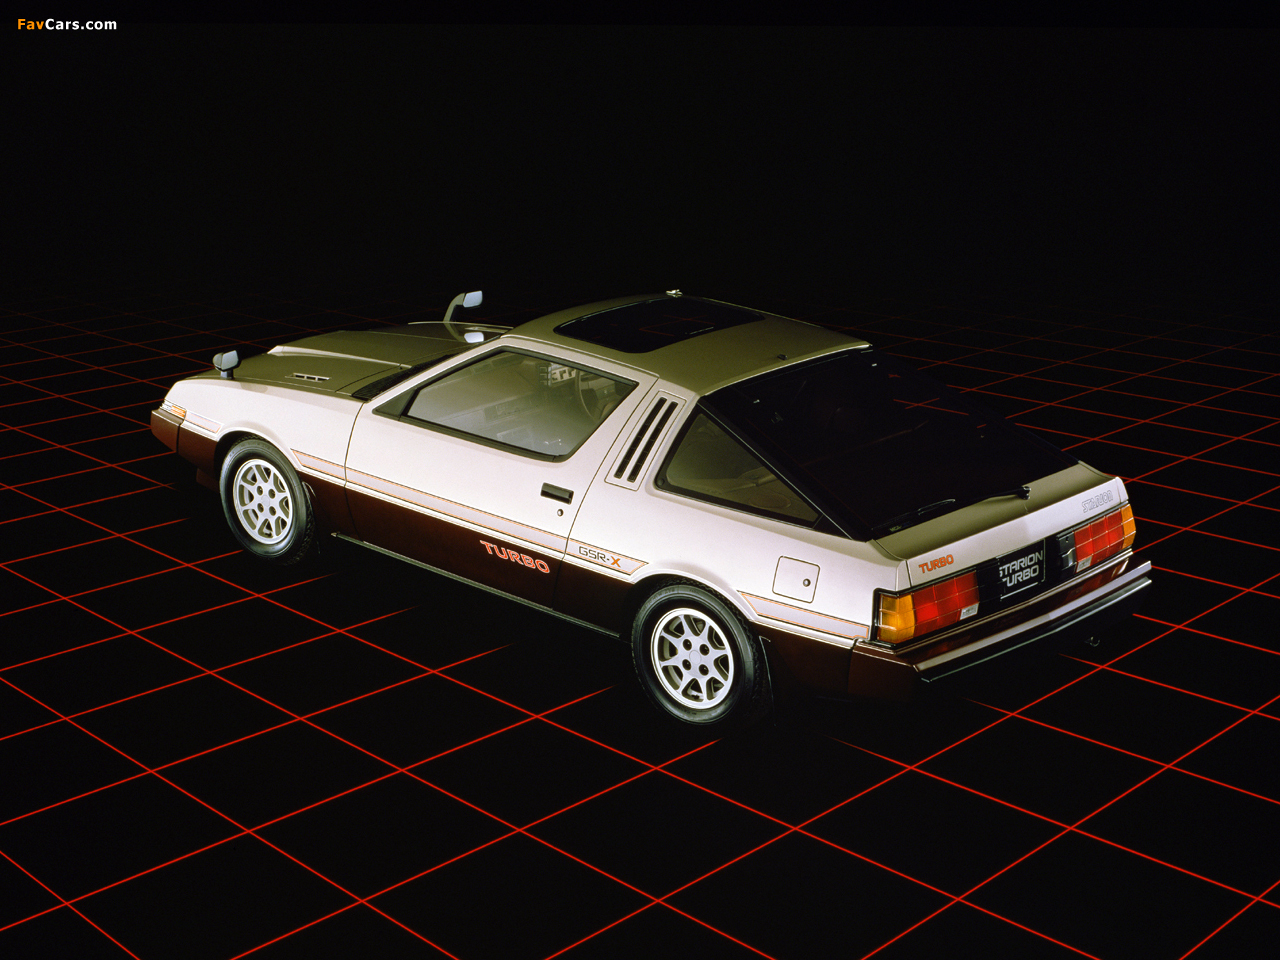 1982 Mitsubishi Starion Turbo